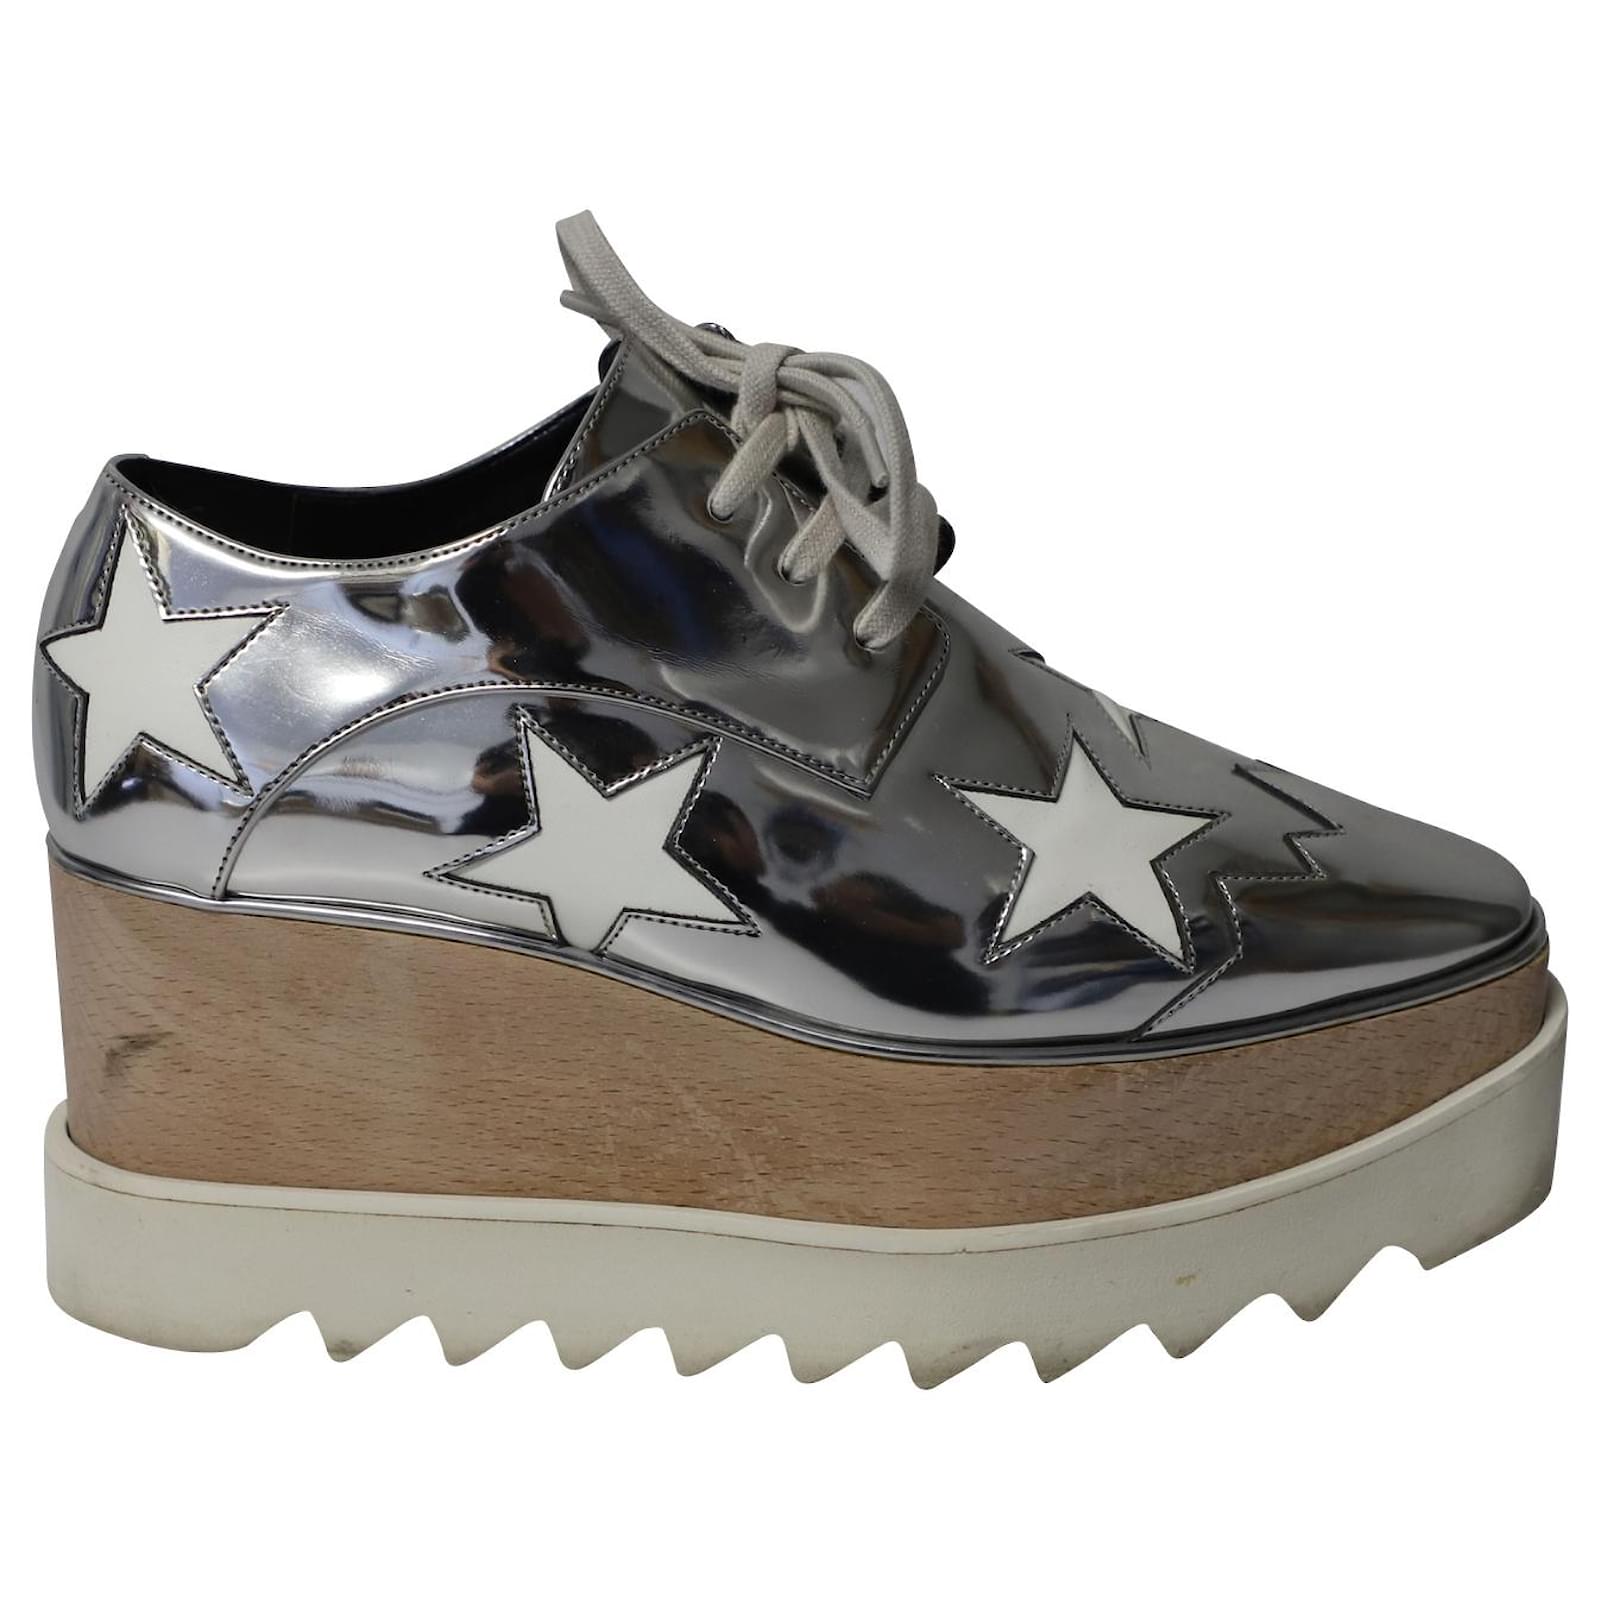 https://cdn1.jolicloset.com/imgr/full/2022/10/655837-1/stella-mccartney-elyse-star-platform-lace-up-sneakers-in-silver-faux-patent-leather-tops.jpg